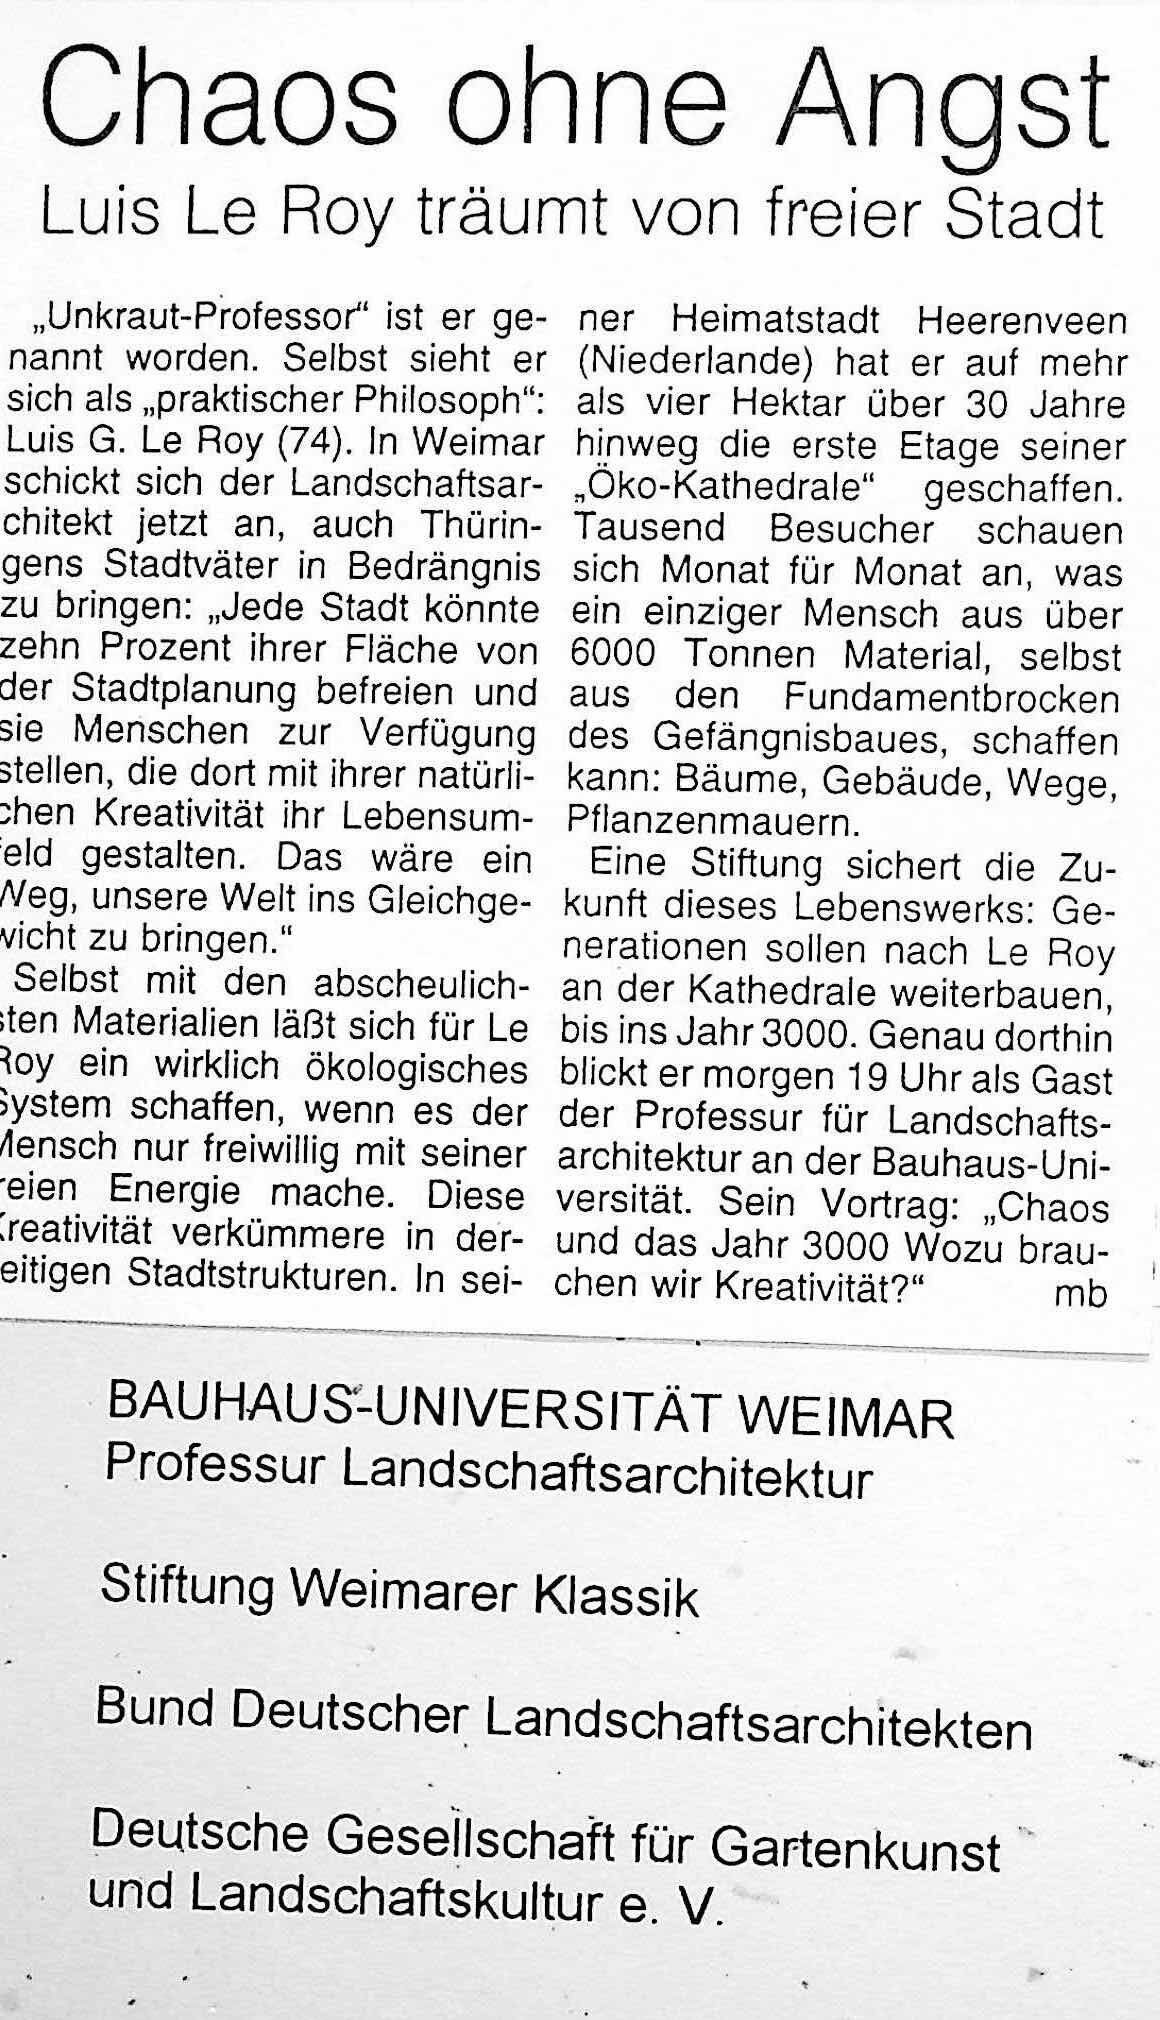 19981119_Chaos_ohne_Angst_Weimar.jpg